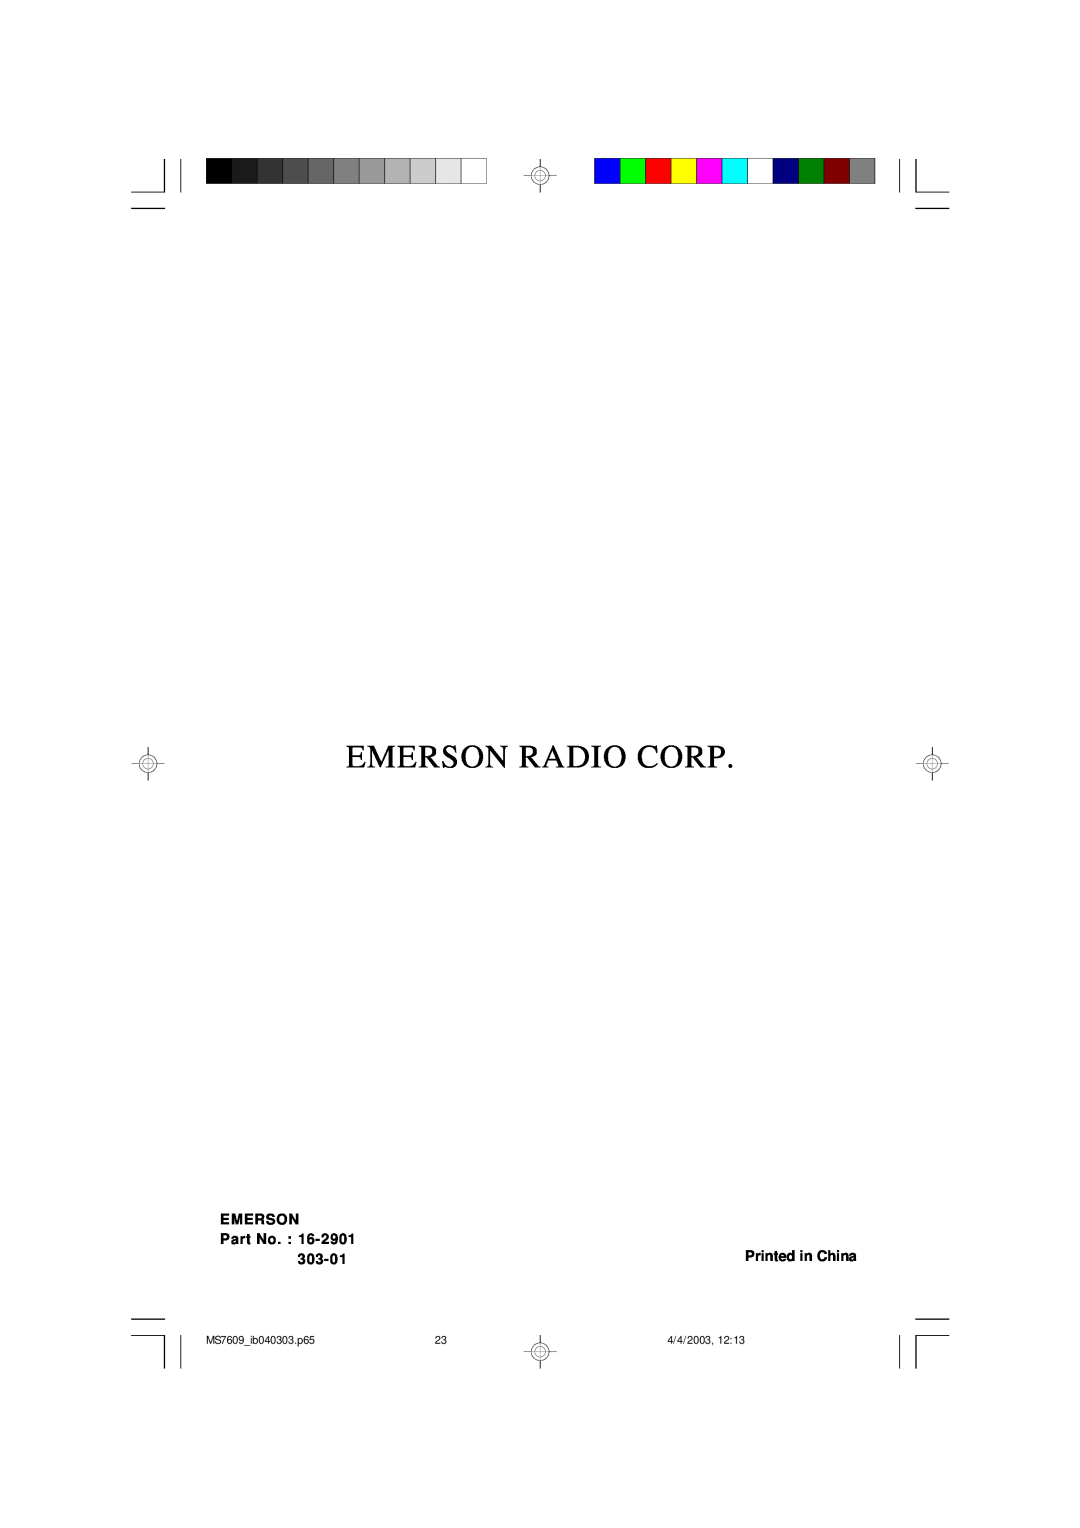 Emerson owner manual Emerson Radio Corp, 303-01, MS7609 ib040303.p65, 4/4/2003 